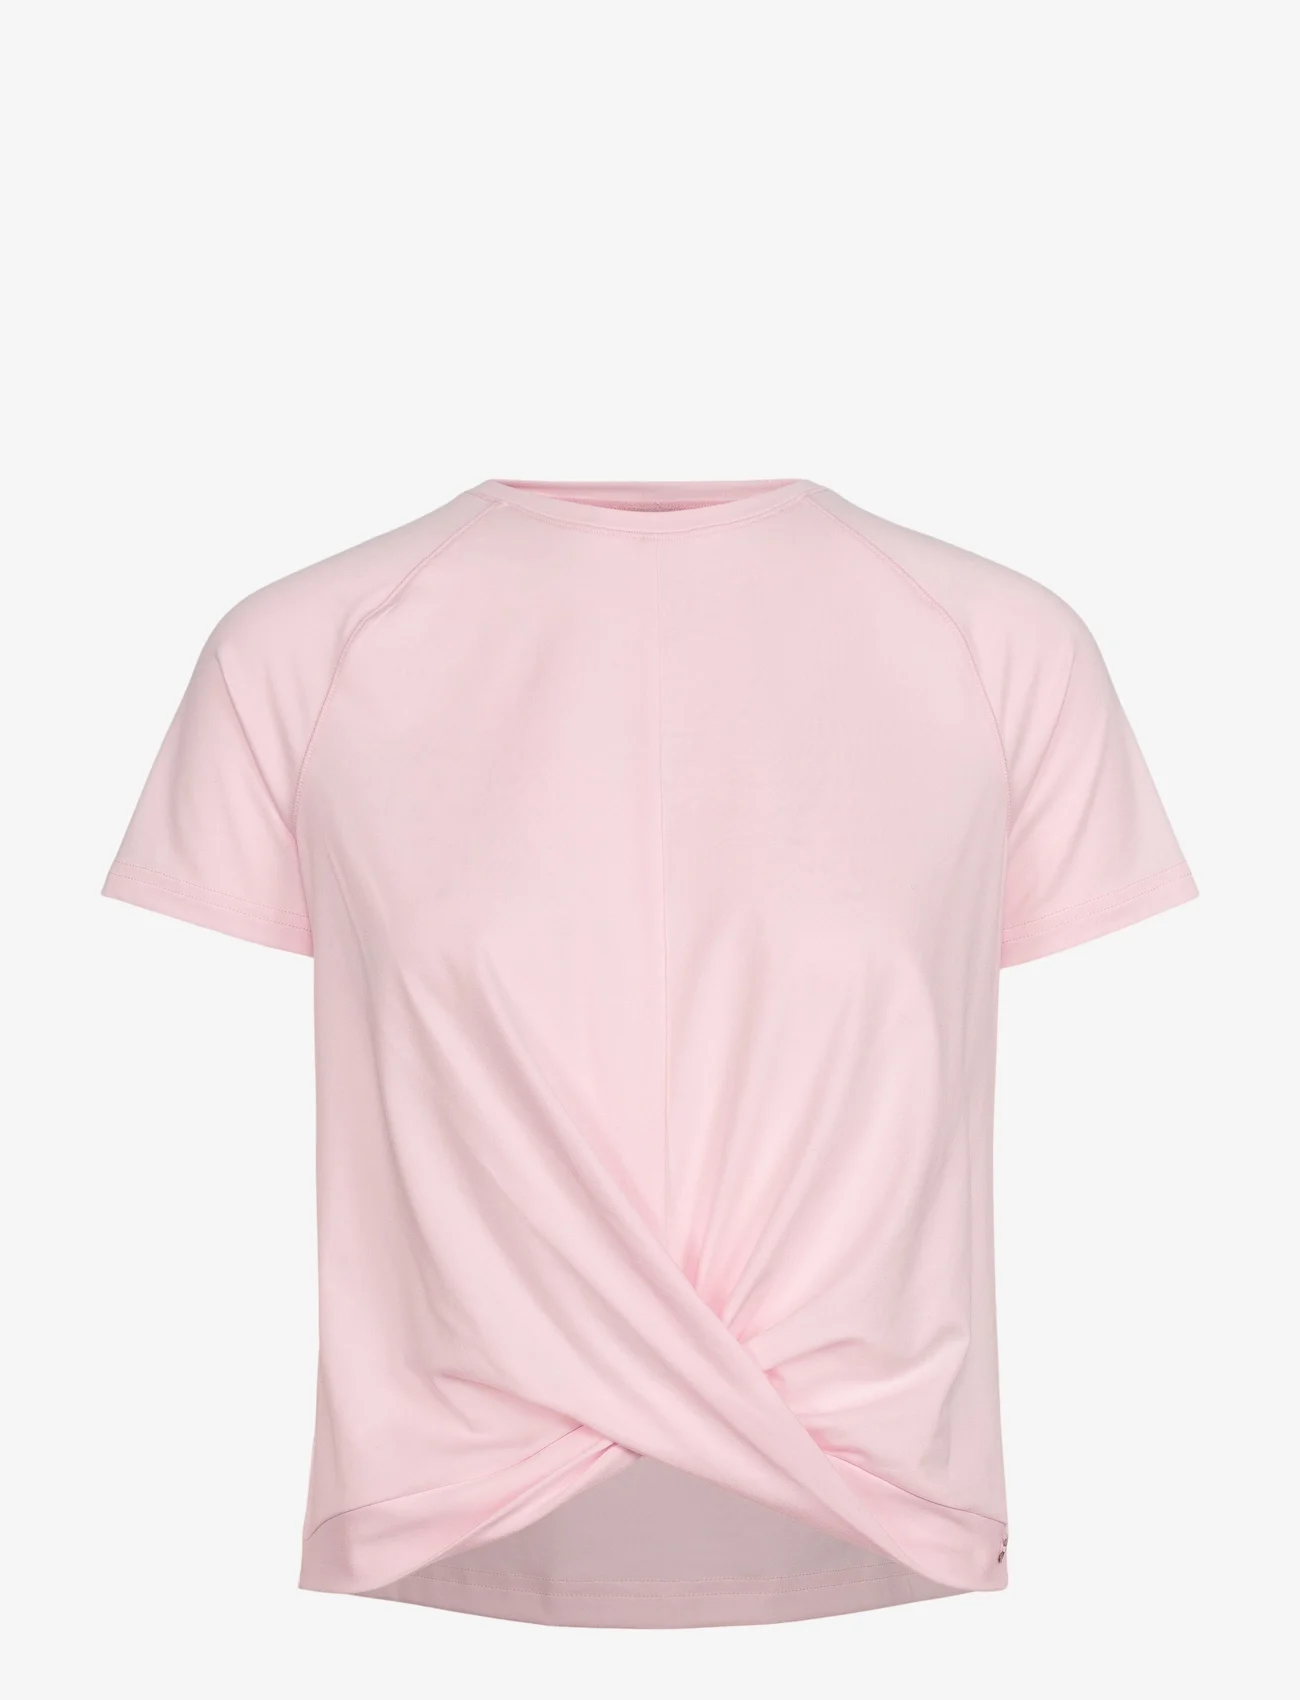 Johaug - Shape Studio Crossover Tee - t-shirts - light pink - 0